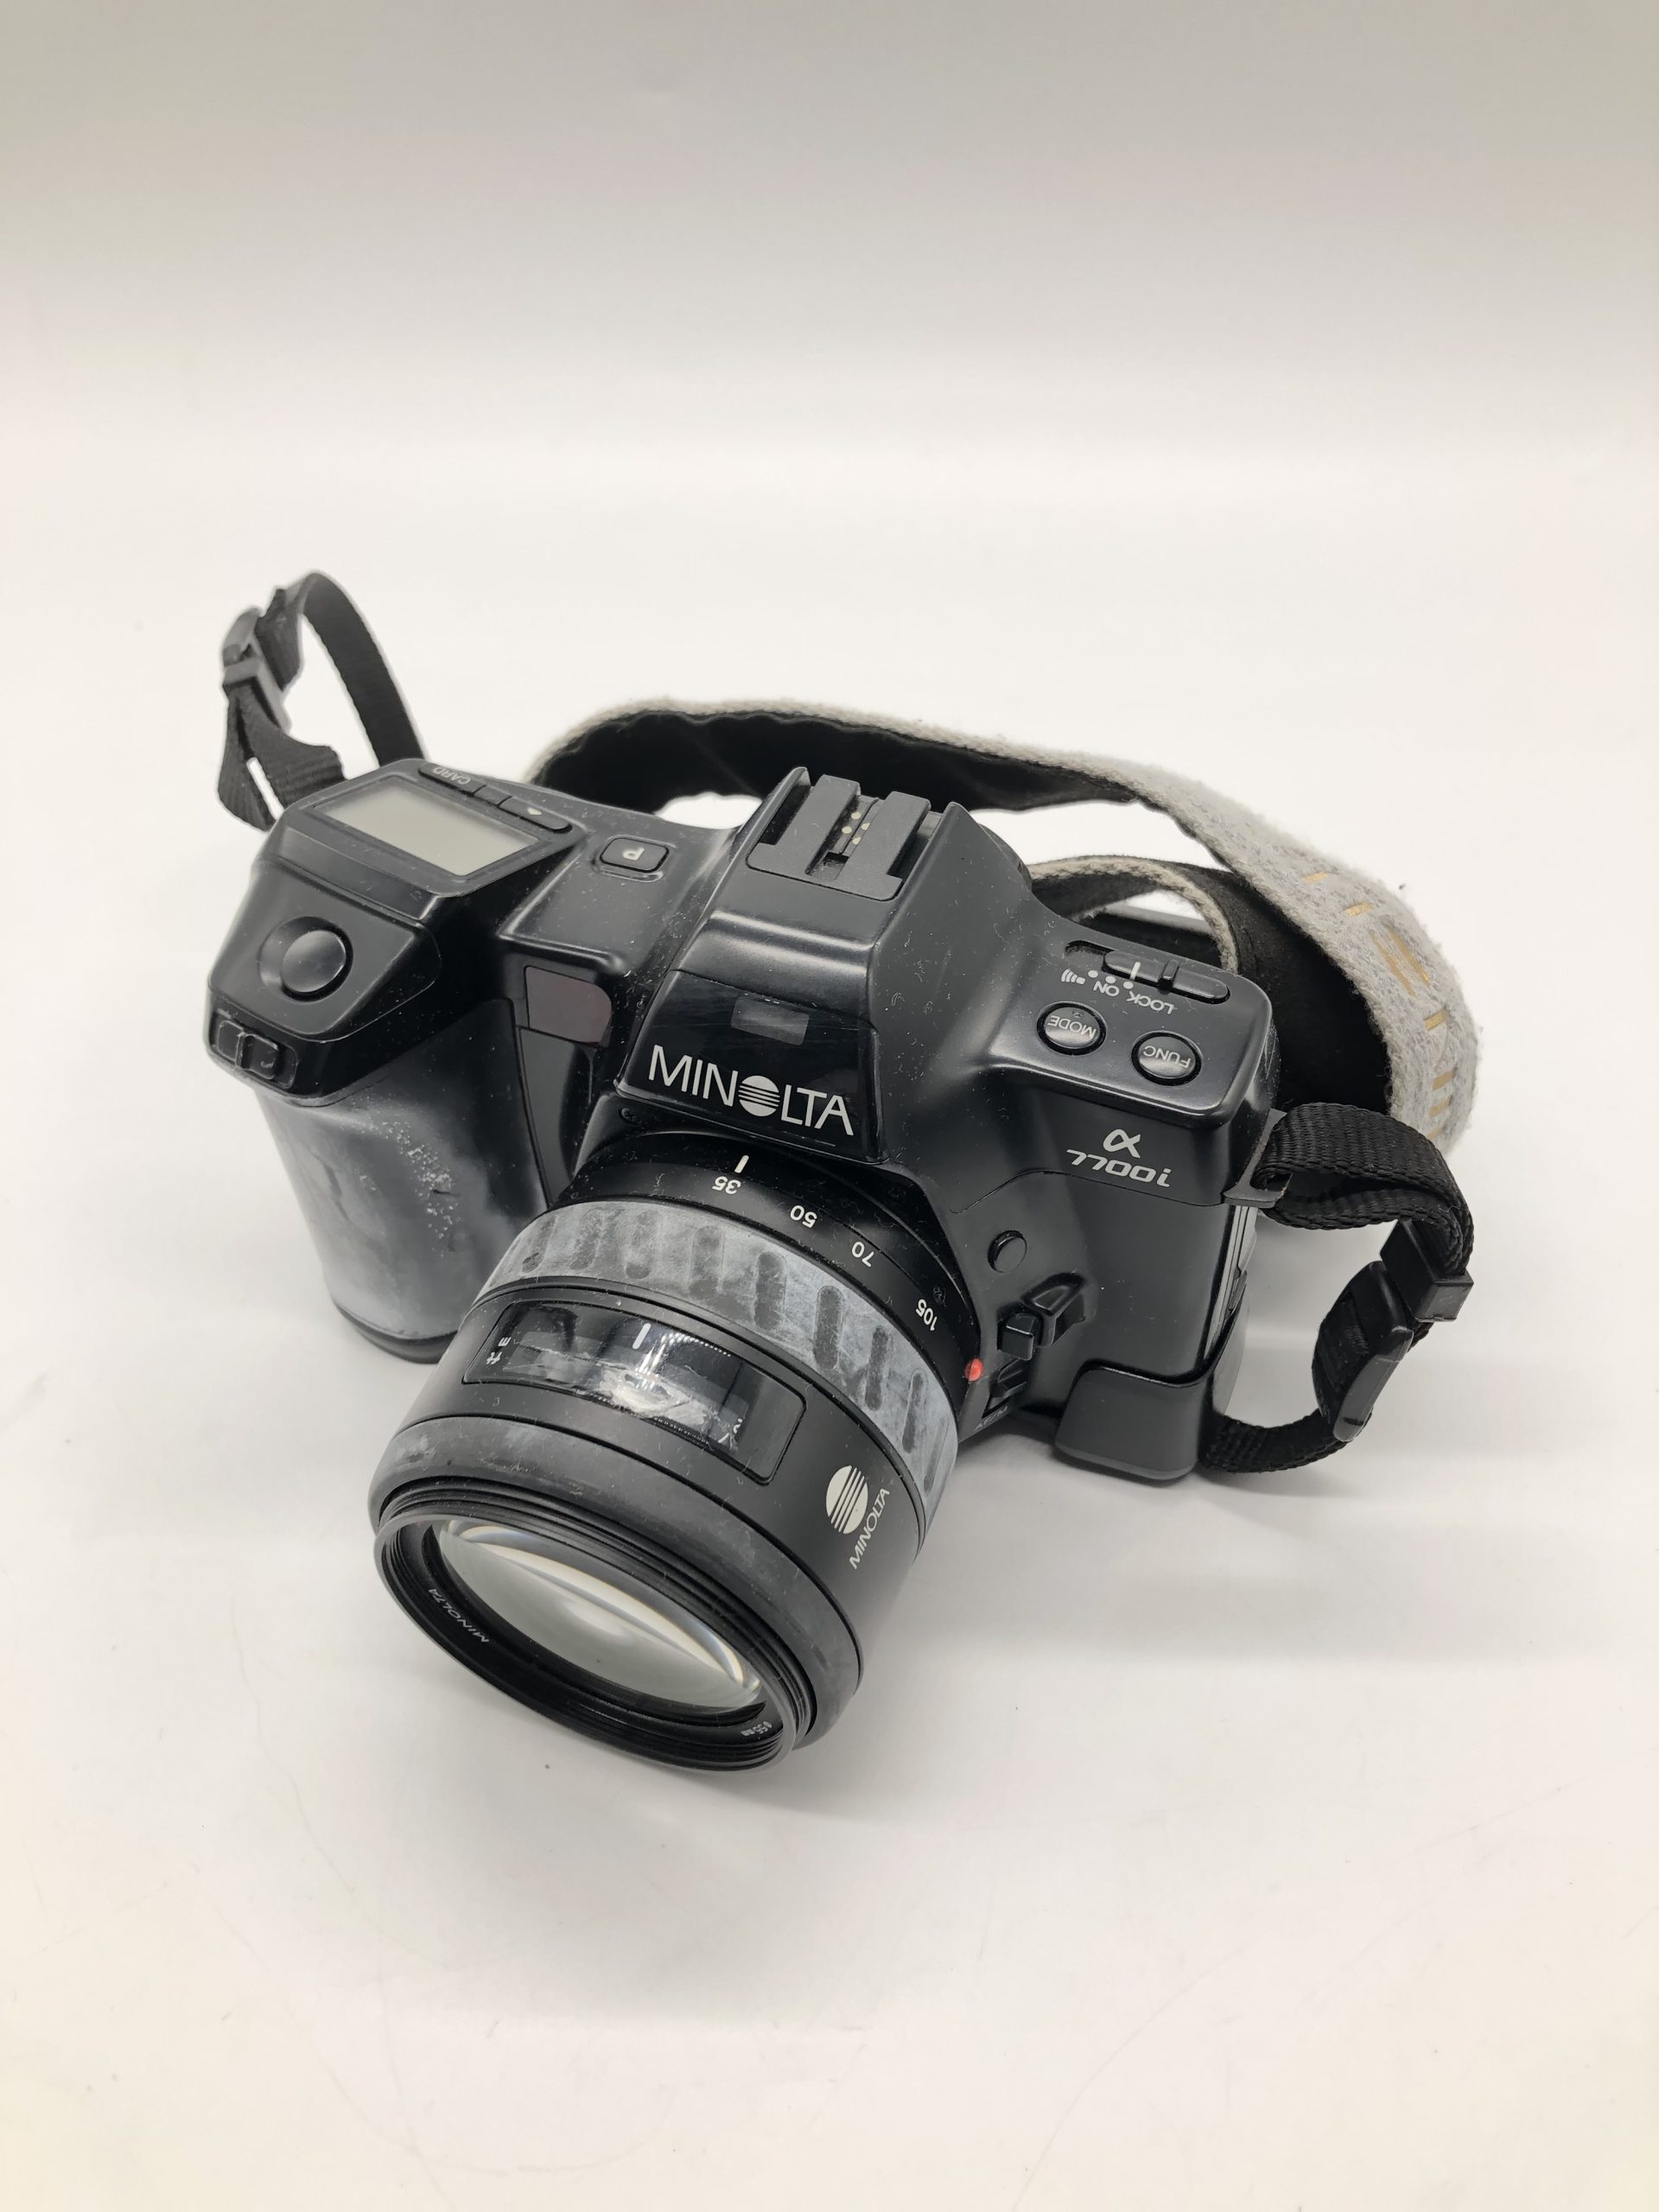 MINOLTA カメラ α 7700i - カメラ